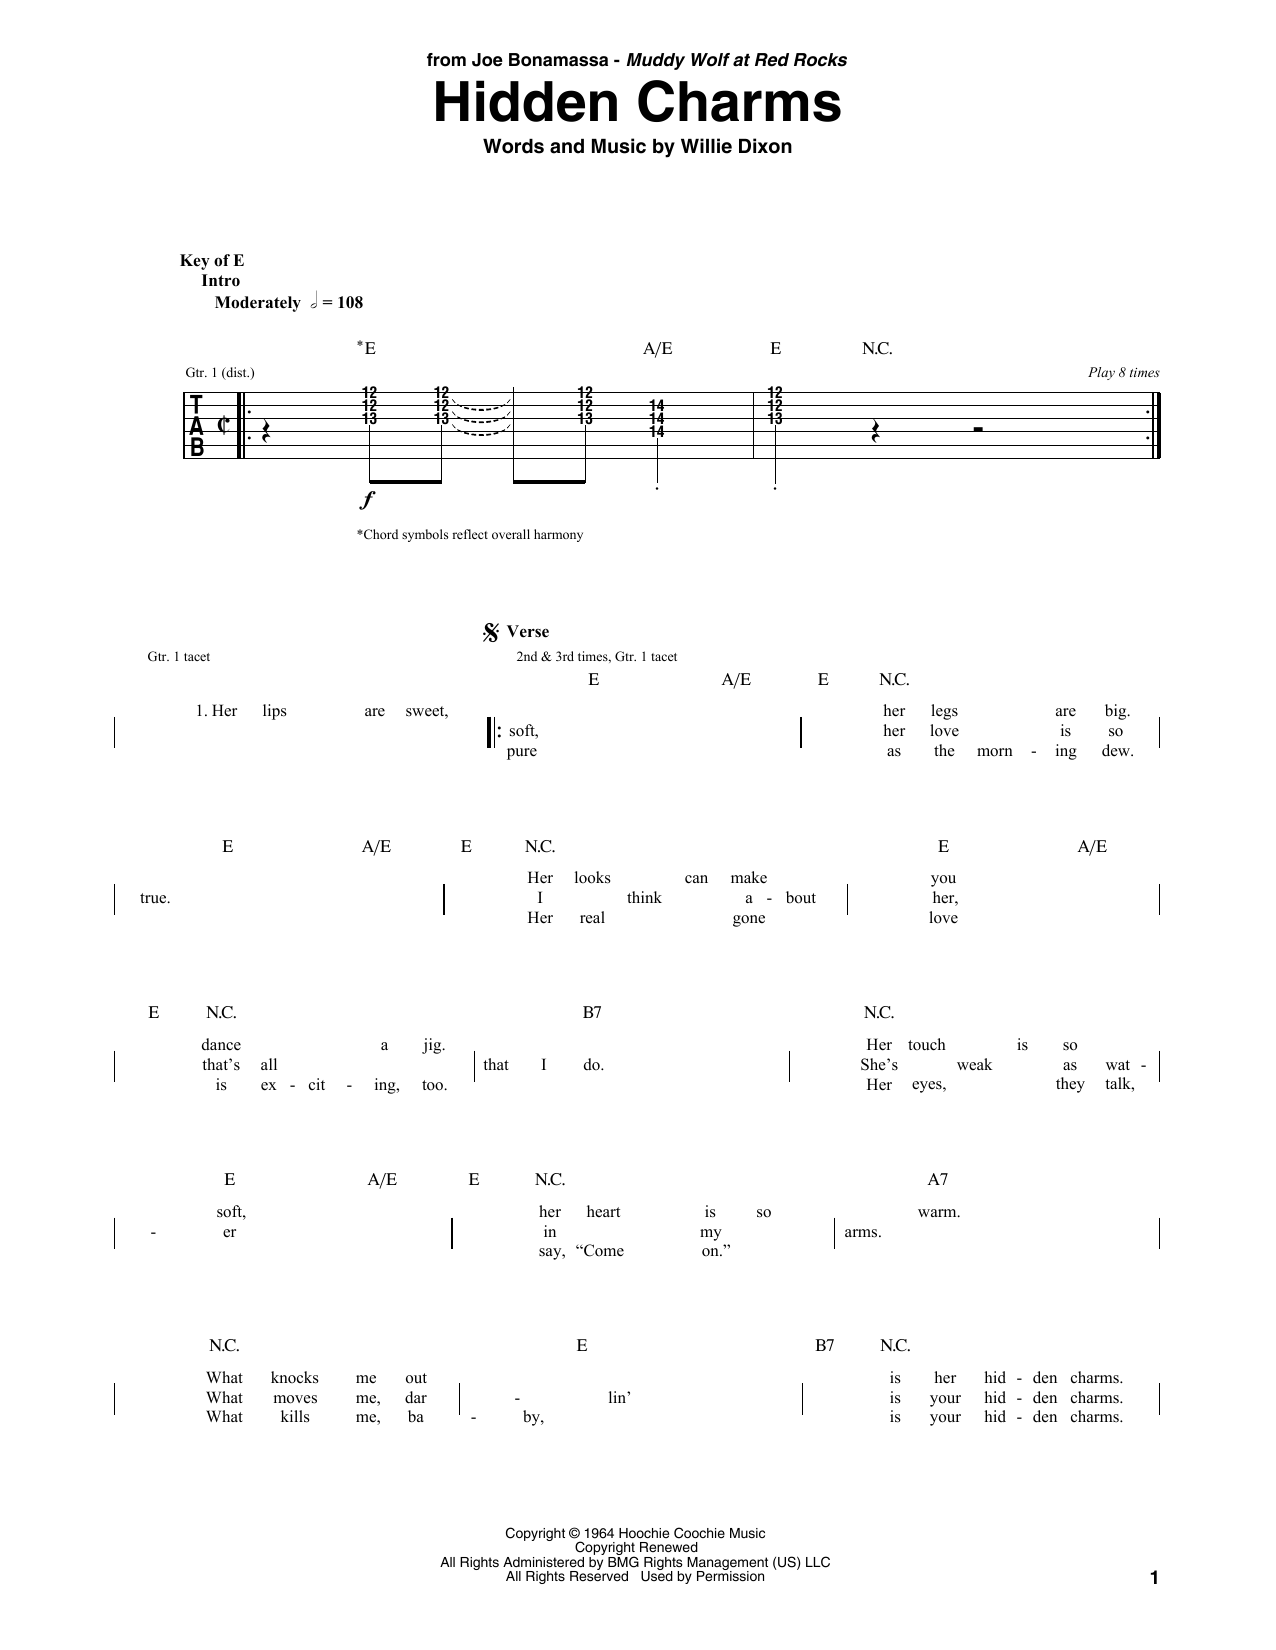 Download Joe Bonamassa Hidden Charms Sheet Music and learn how to play Guitar Tab PDF digital score in minutes